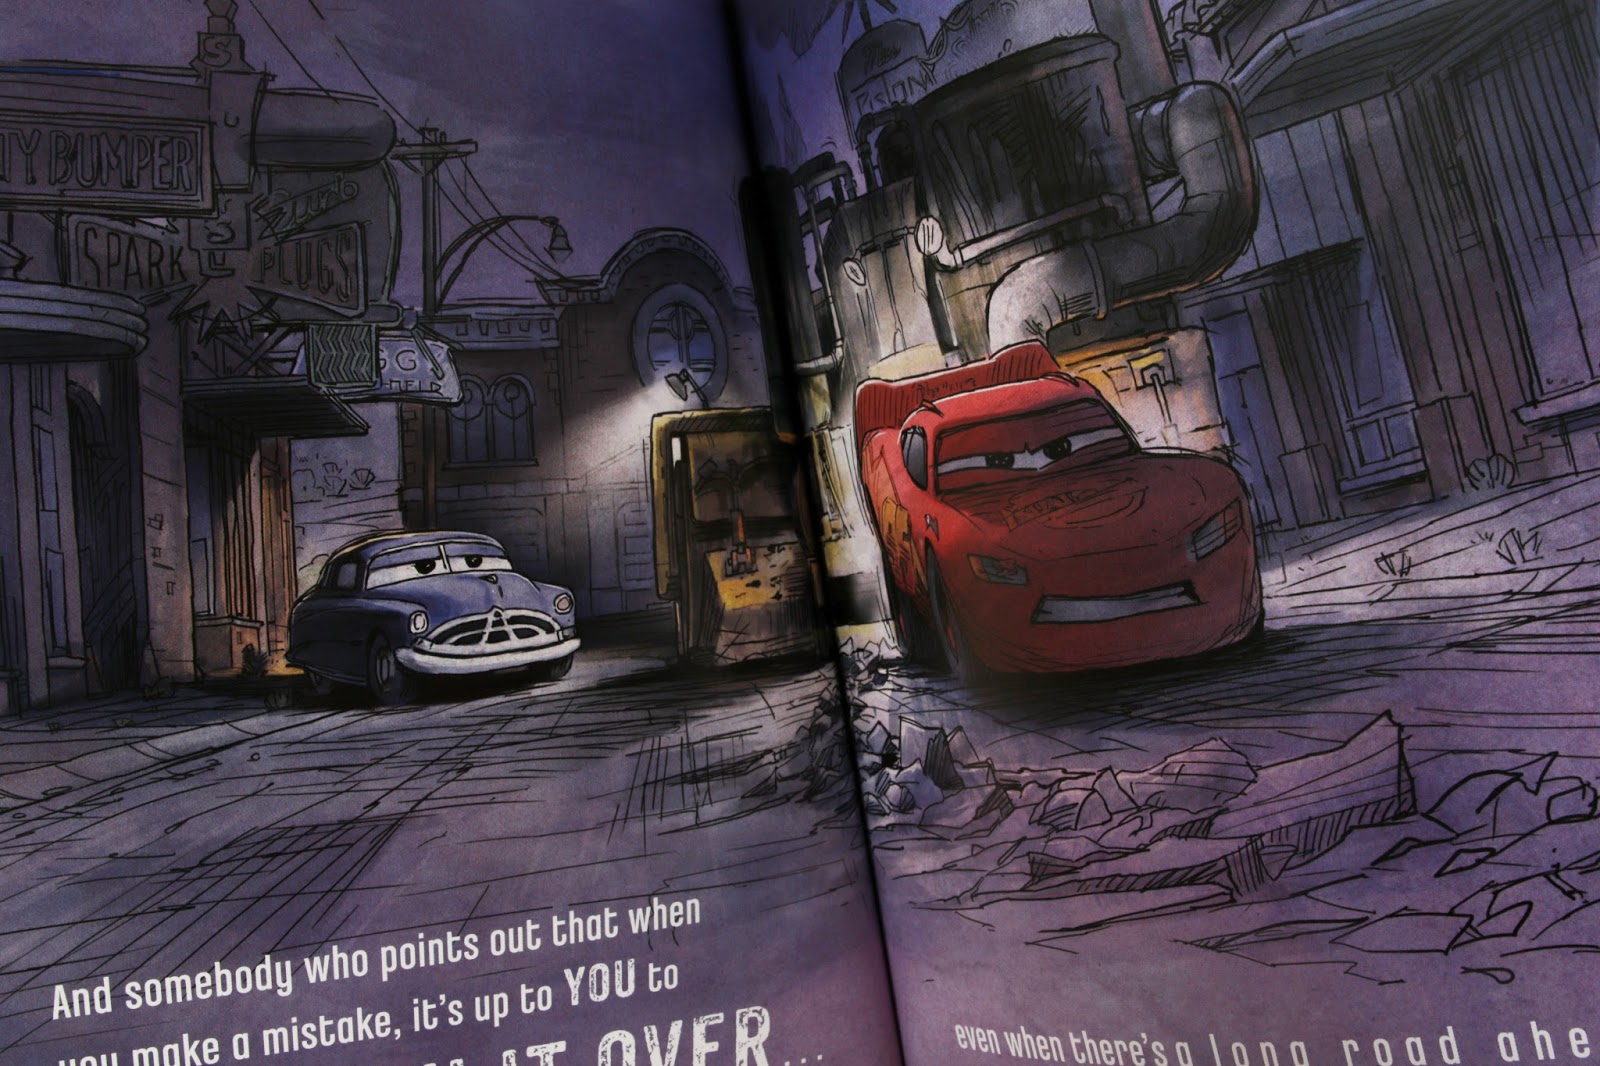 disney pixar Cars 3 "Lead the Way" Book Review